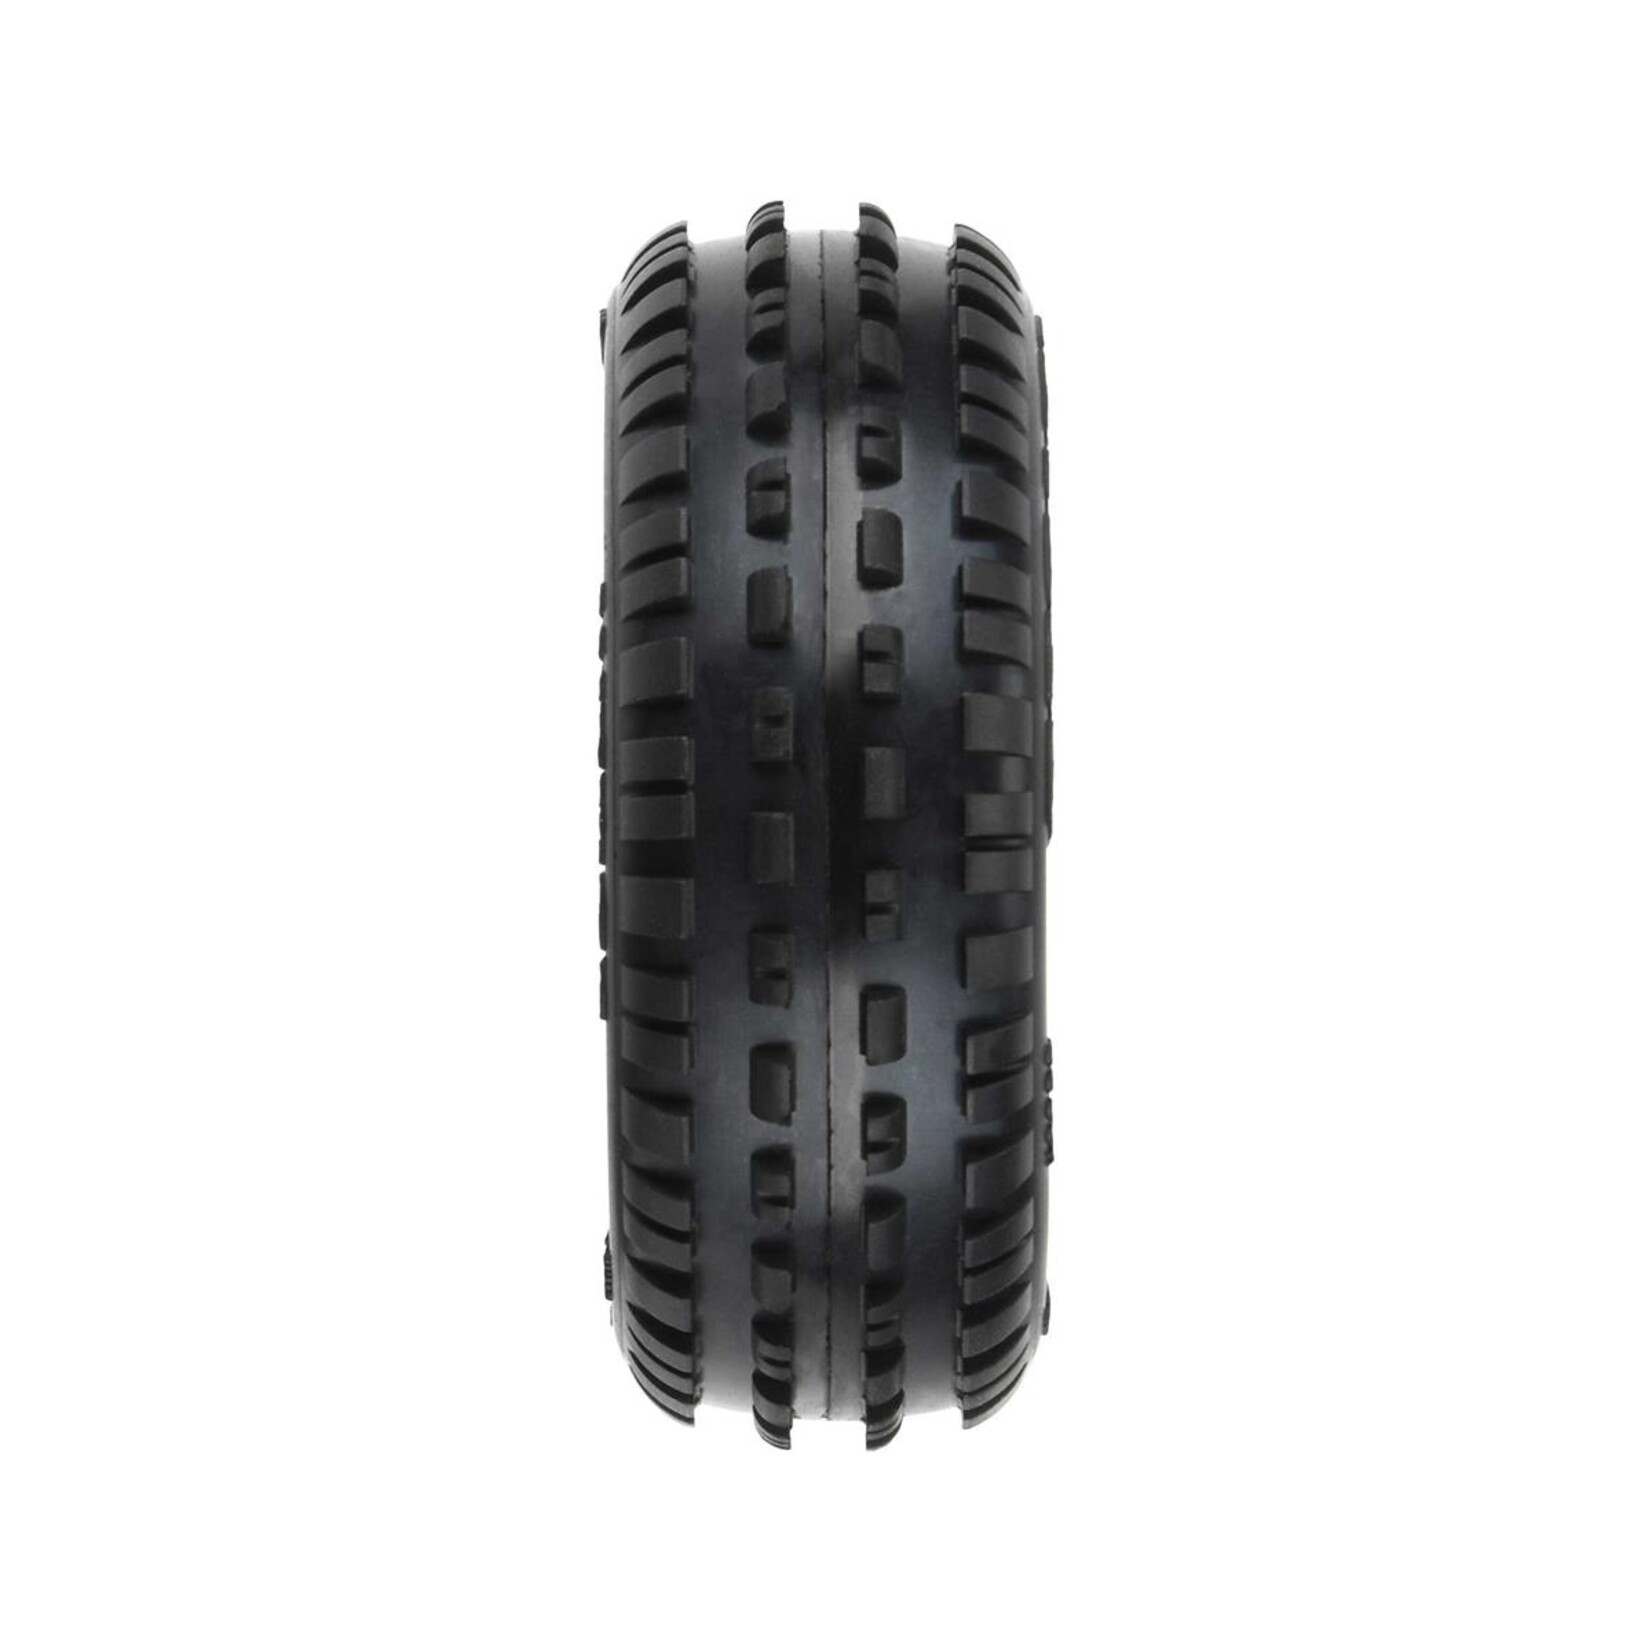 Pro-Line Pro-Line Mini-B Front Pre-Mounted Wedge Carpet Tire w/8mm Hex (White) (2) (Z3) #8298-13